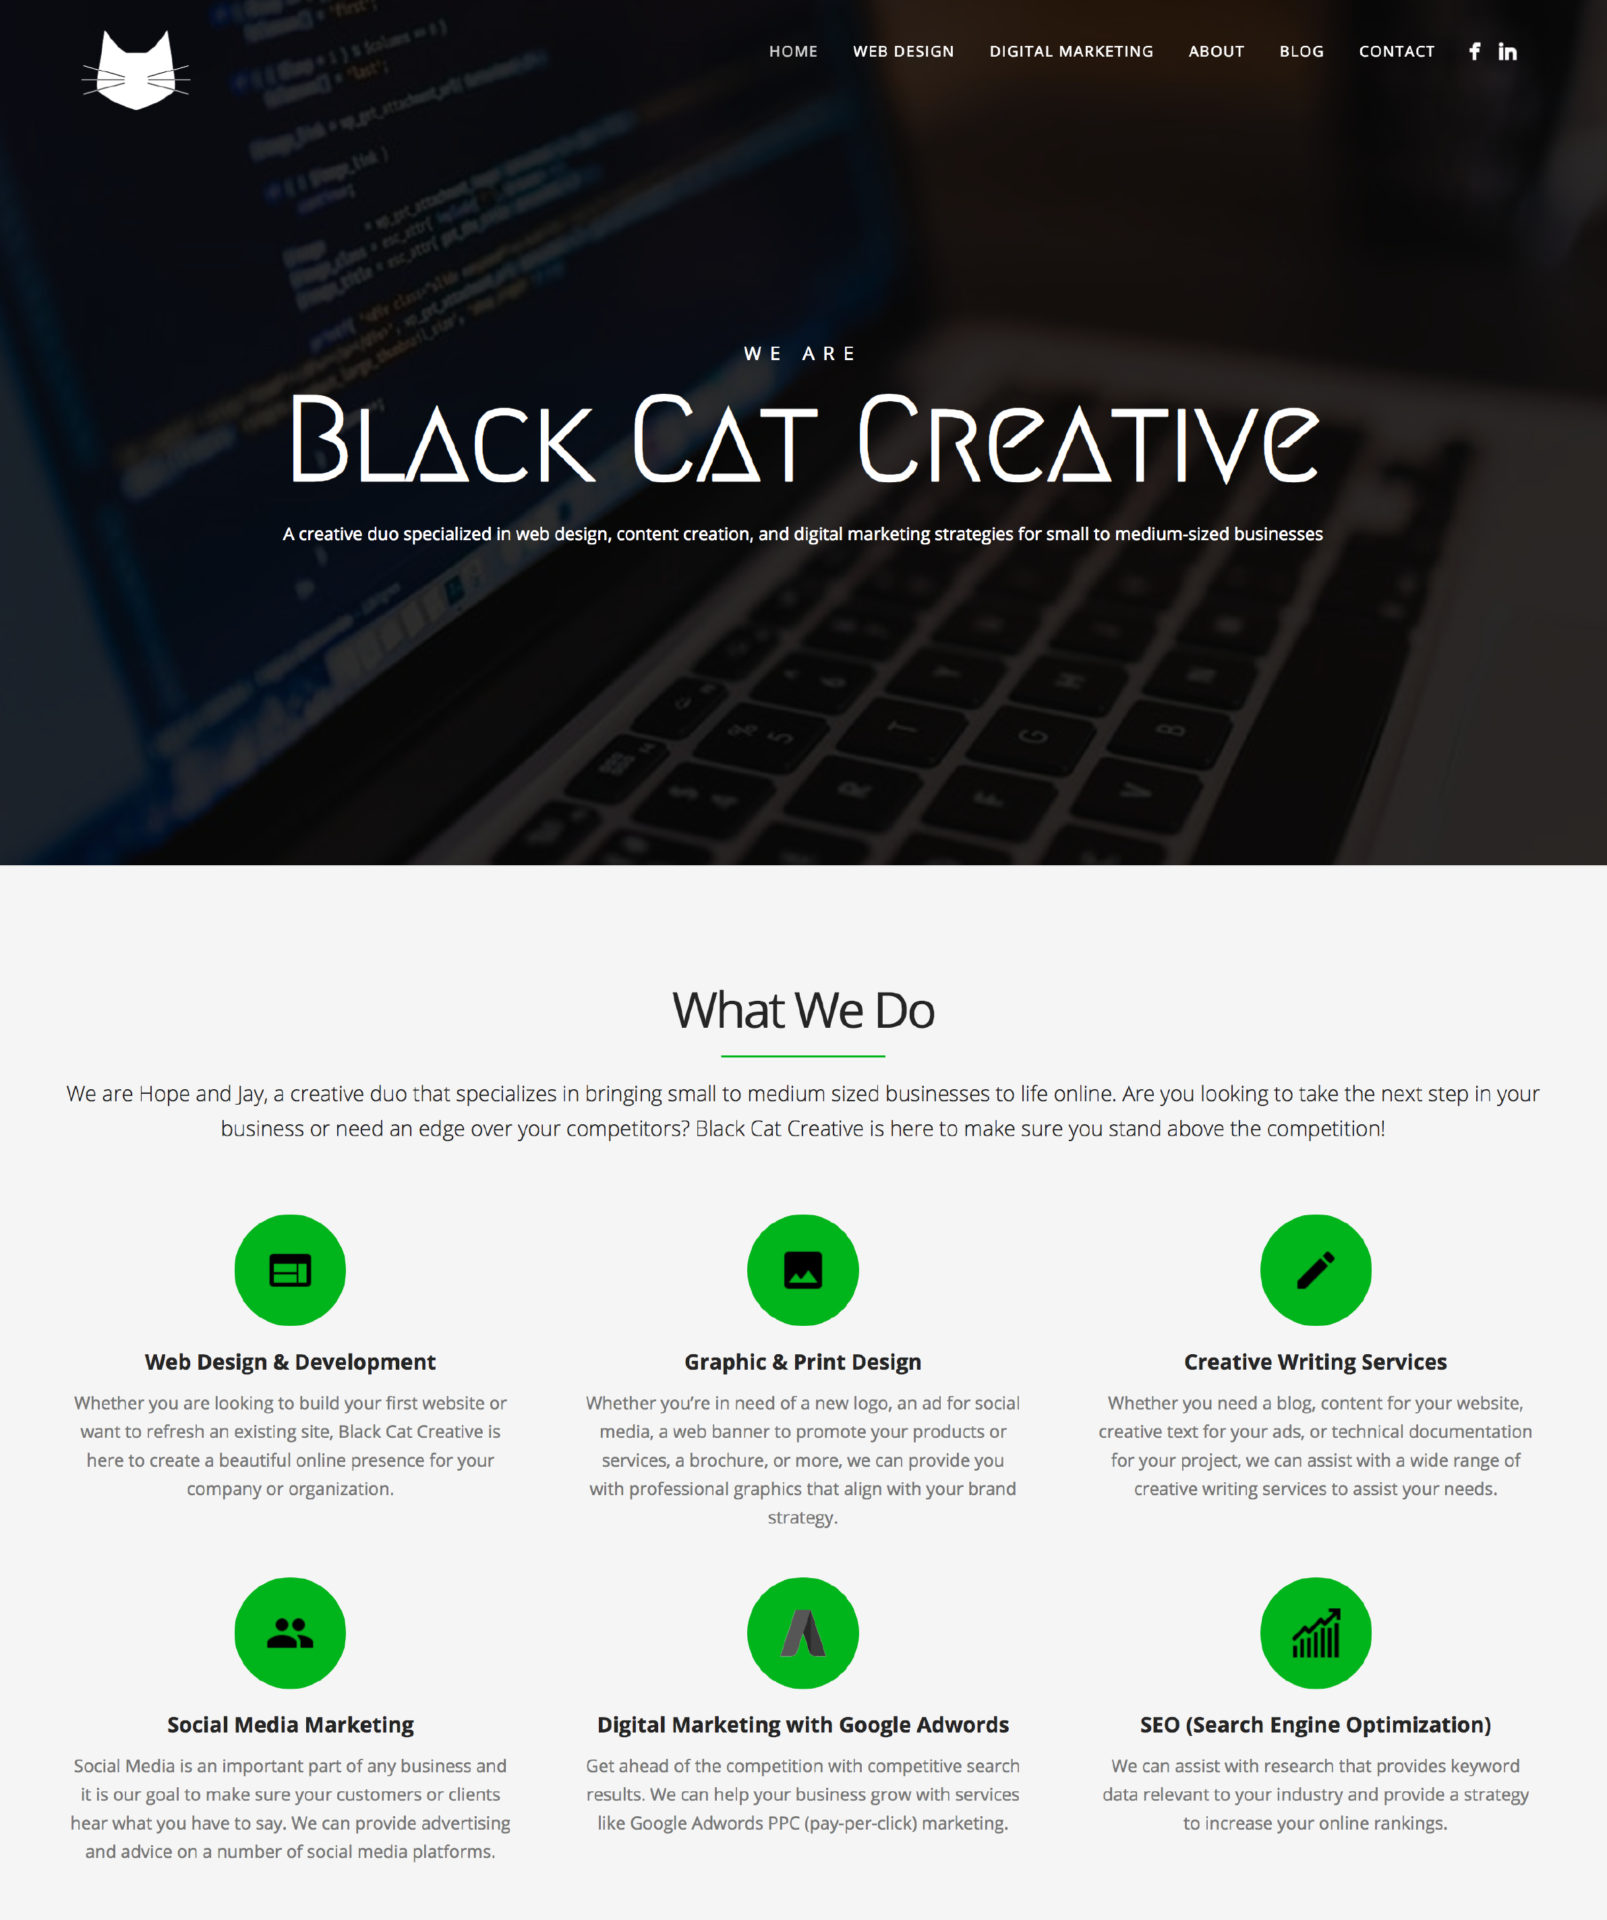 Black Cat Creative website home page design